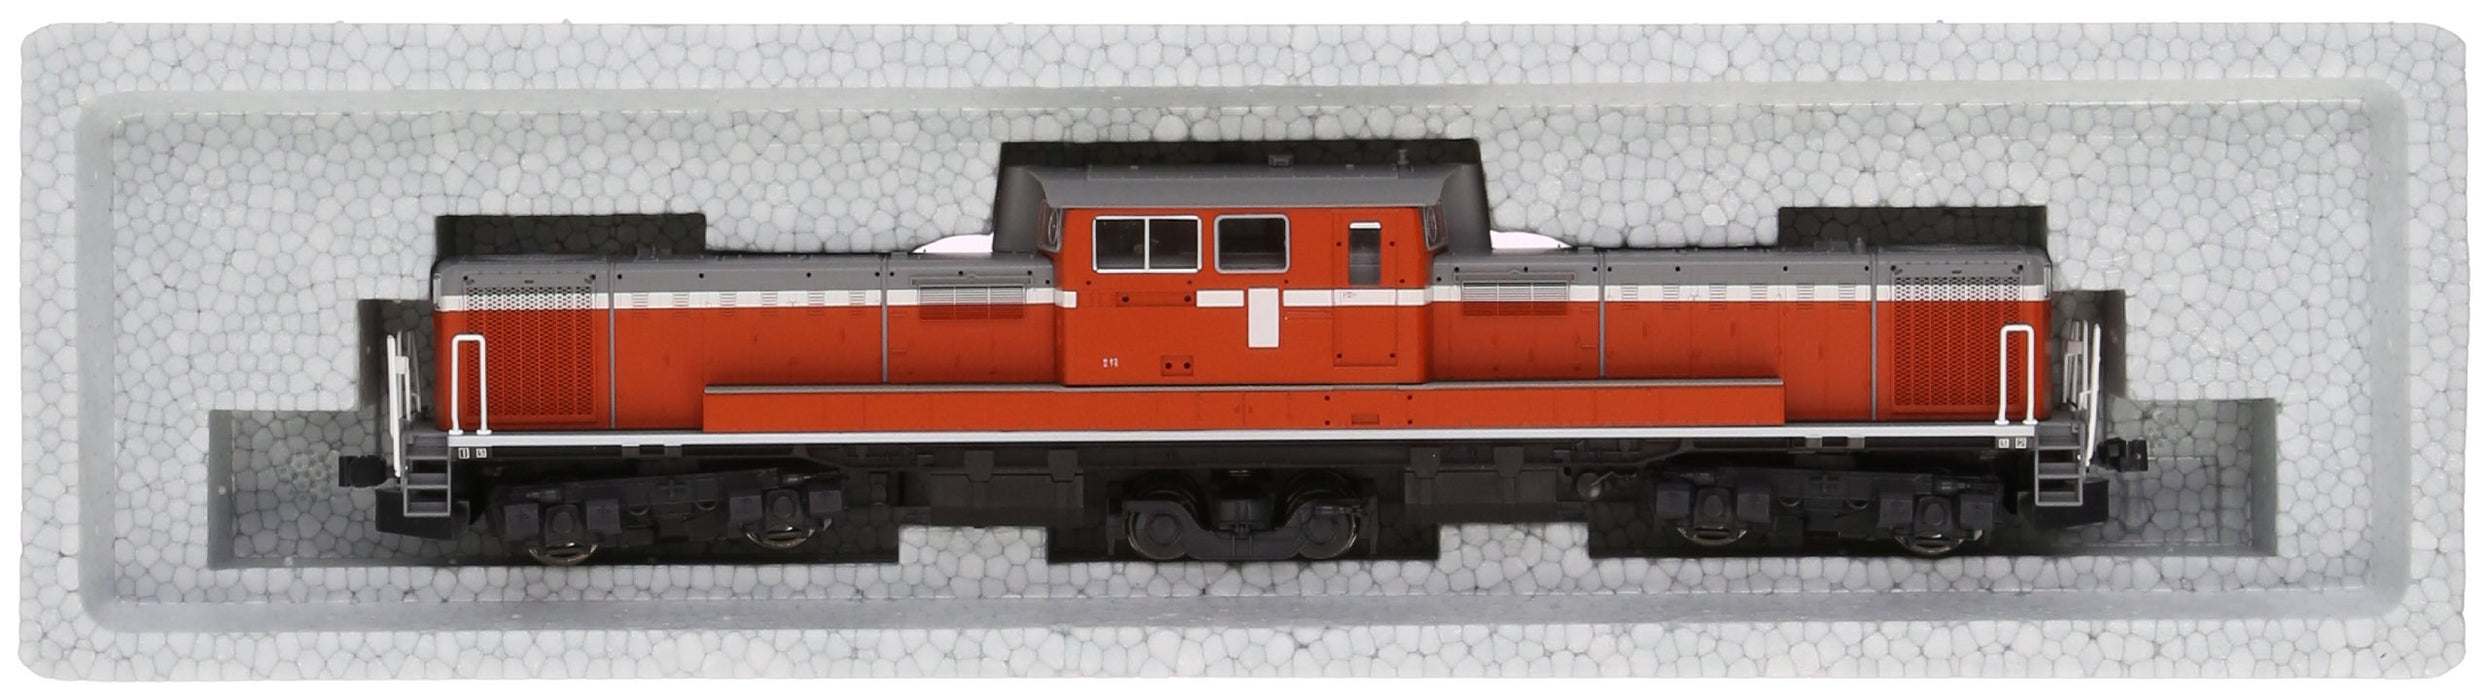 Kato Ho Gauge 1-701 Diesel Locomotive Cold Resistant Railway Model